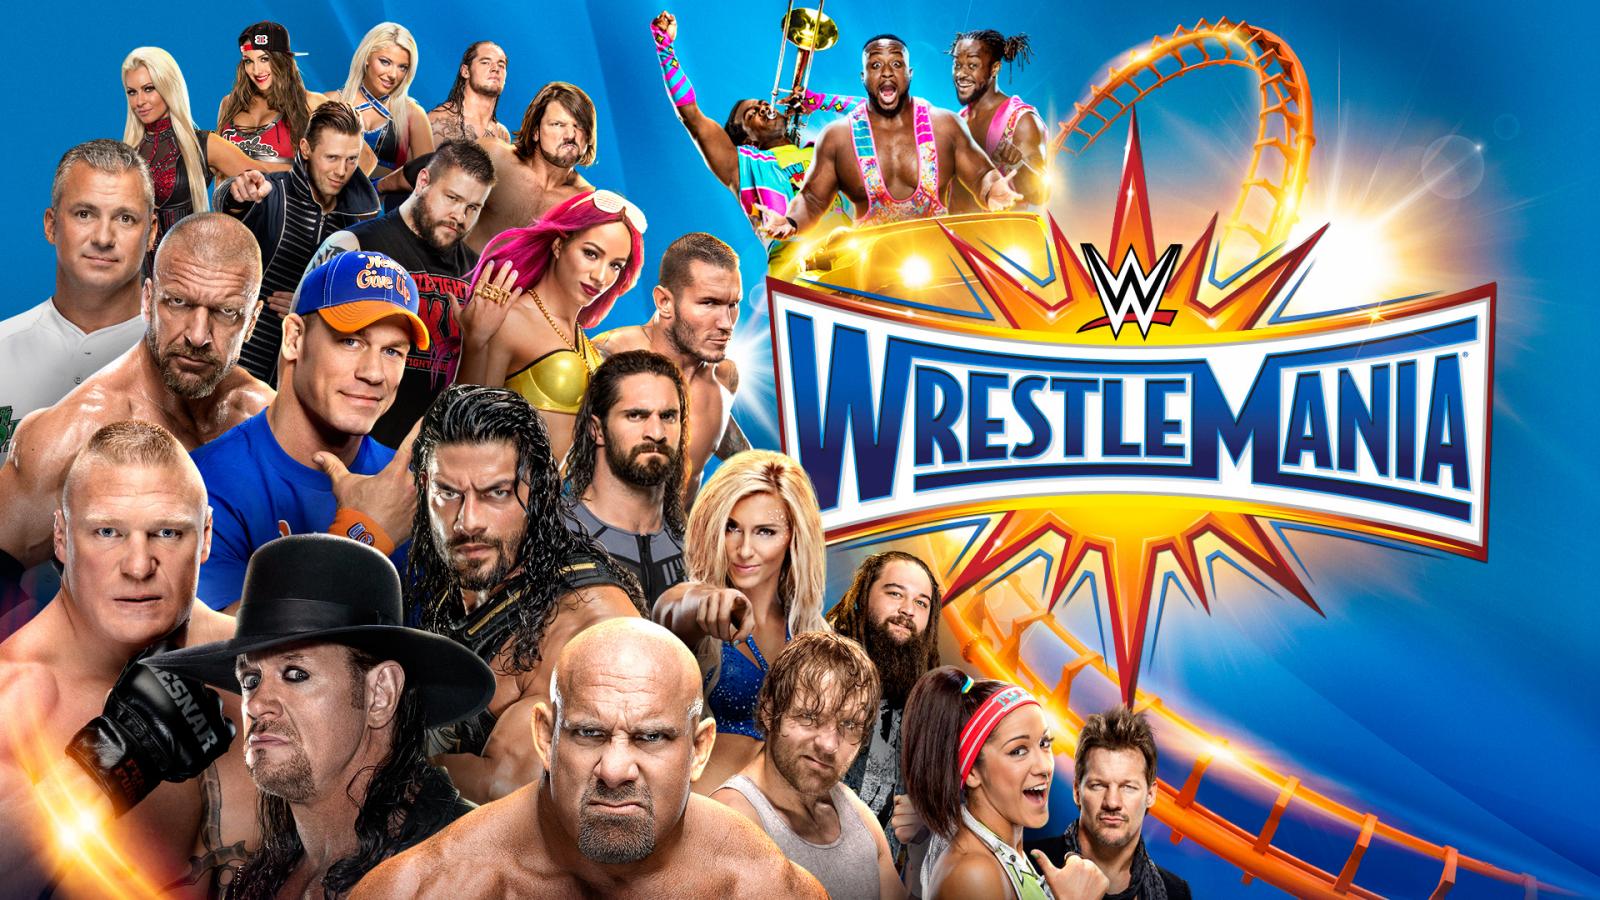 How to Watch WWE WrestleMania 33 Free Live Stream Online